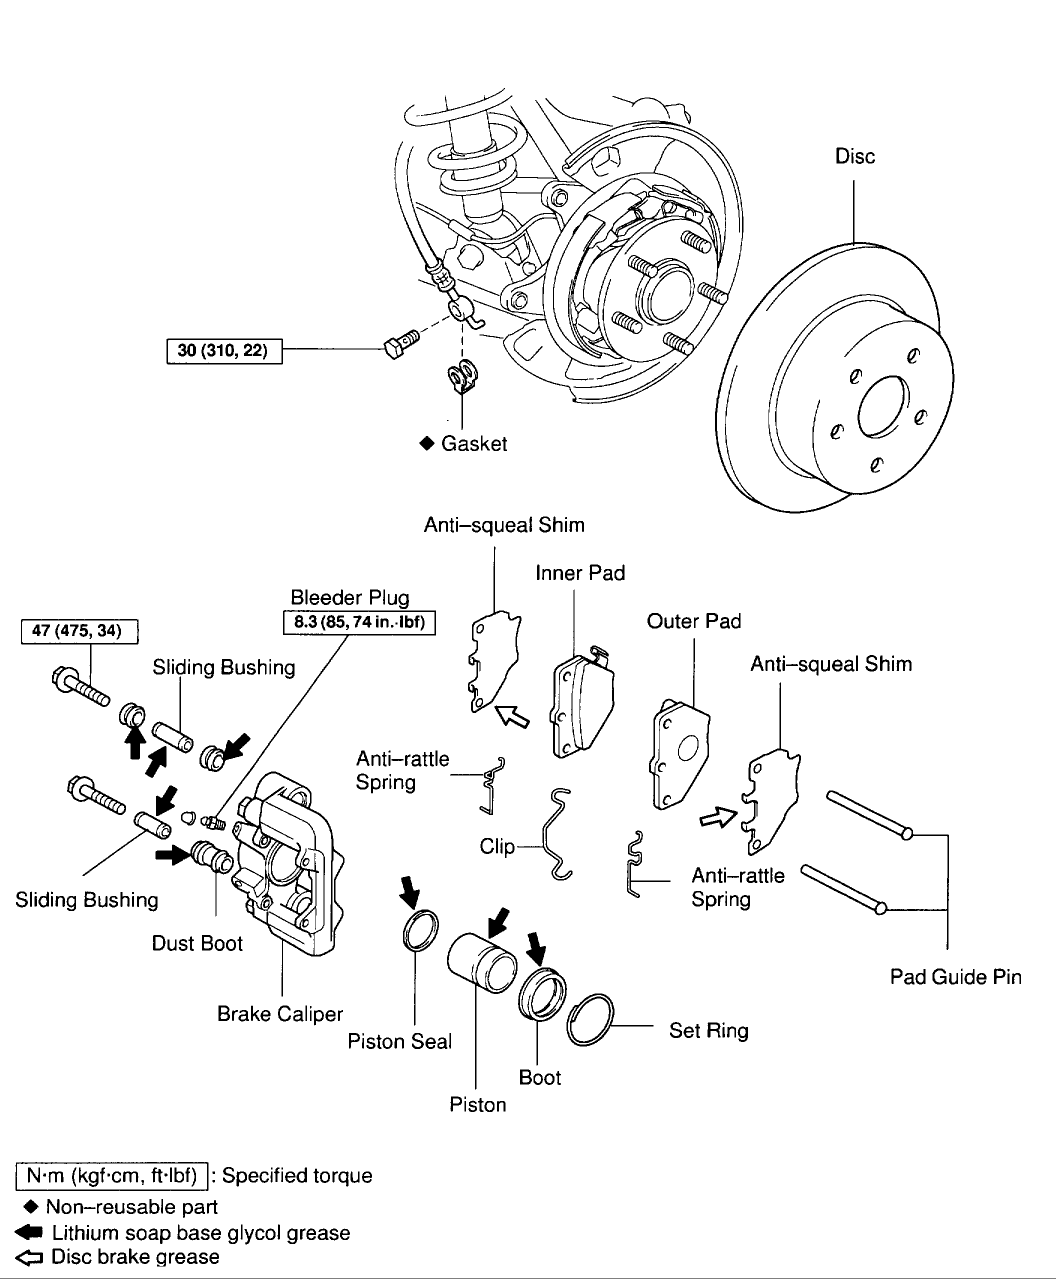 1997 toyota celica repair manual pdf